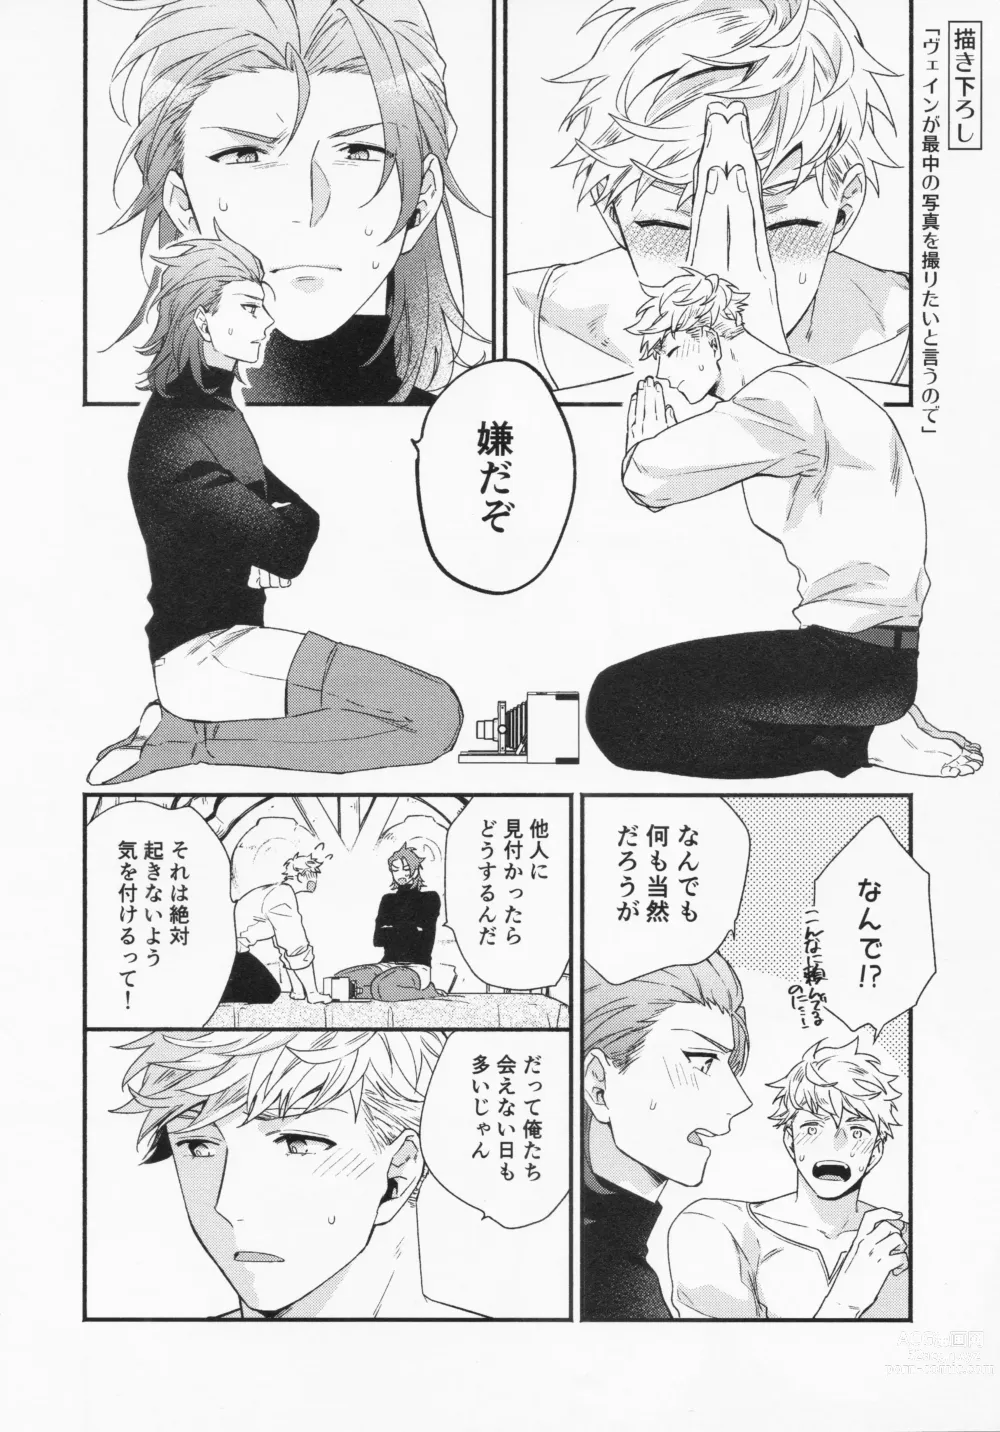 Page 119 of doujinshi Sairoku 3